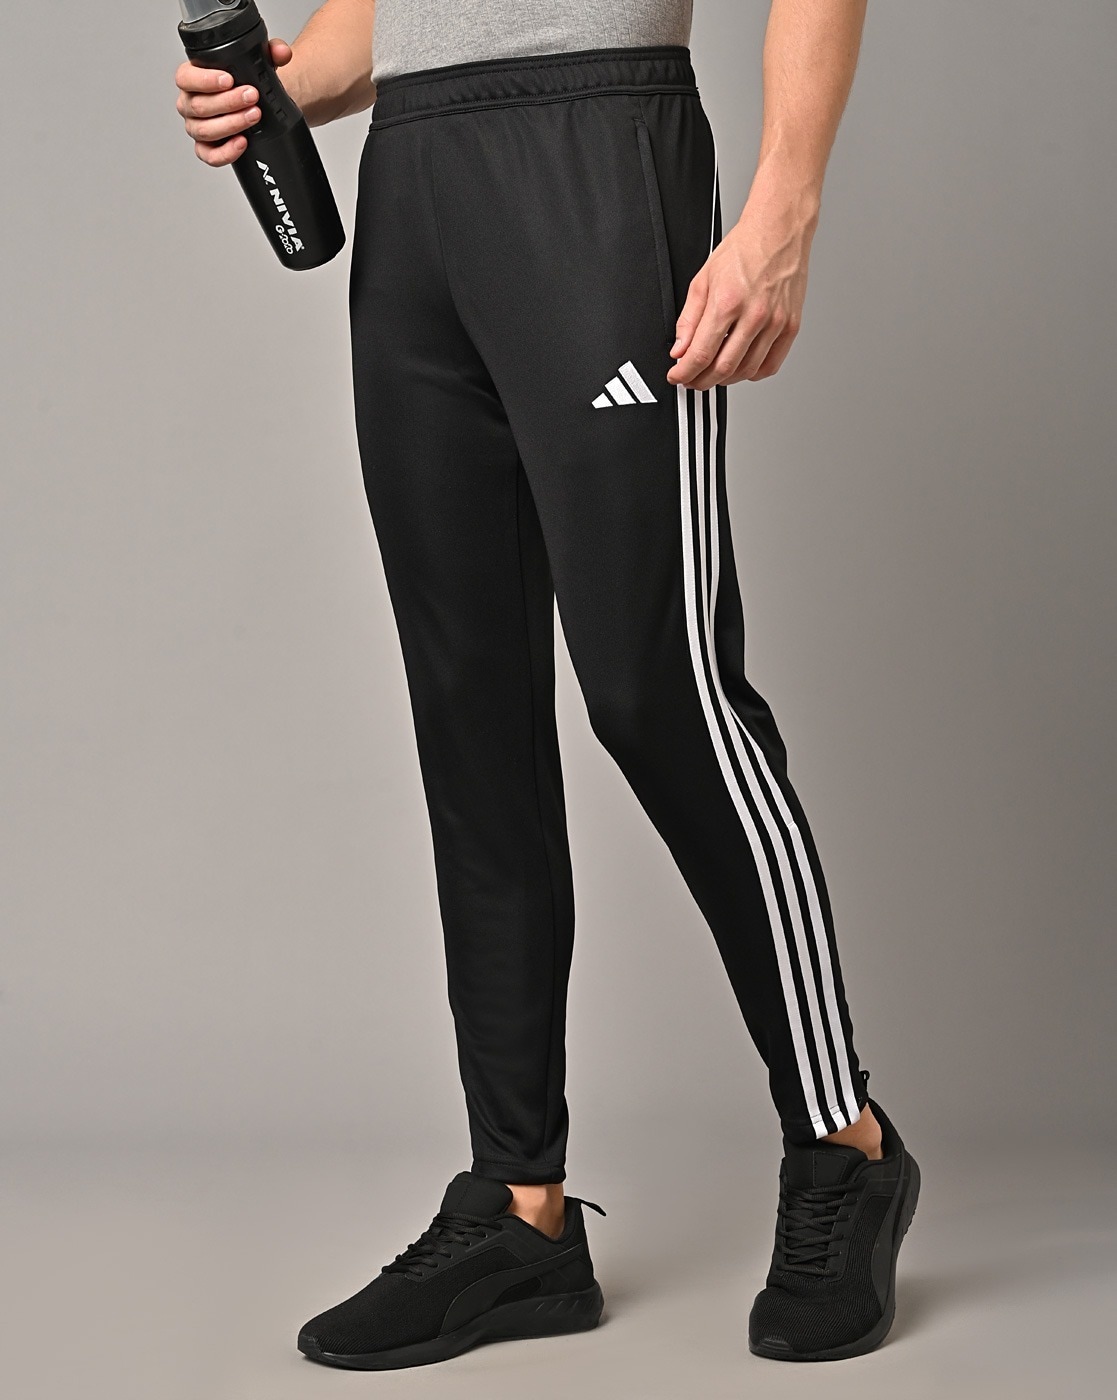 Buy Black Track Pants for Men Online | Ajio.com